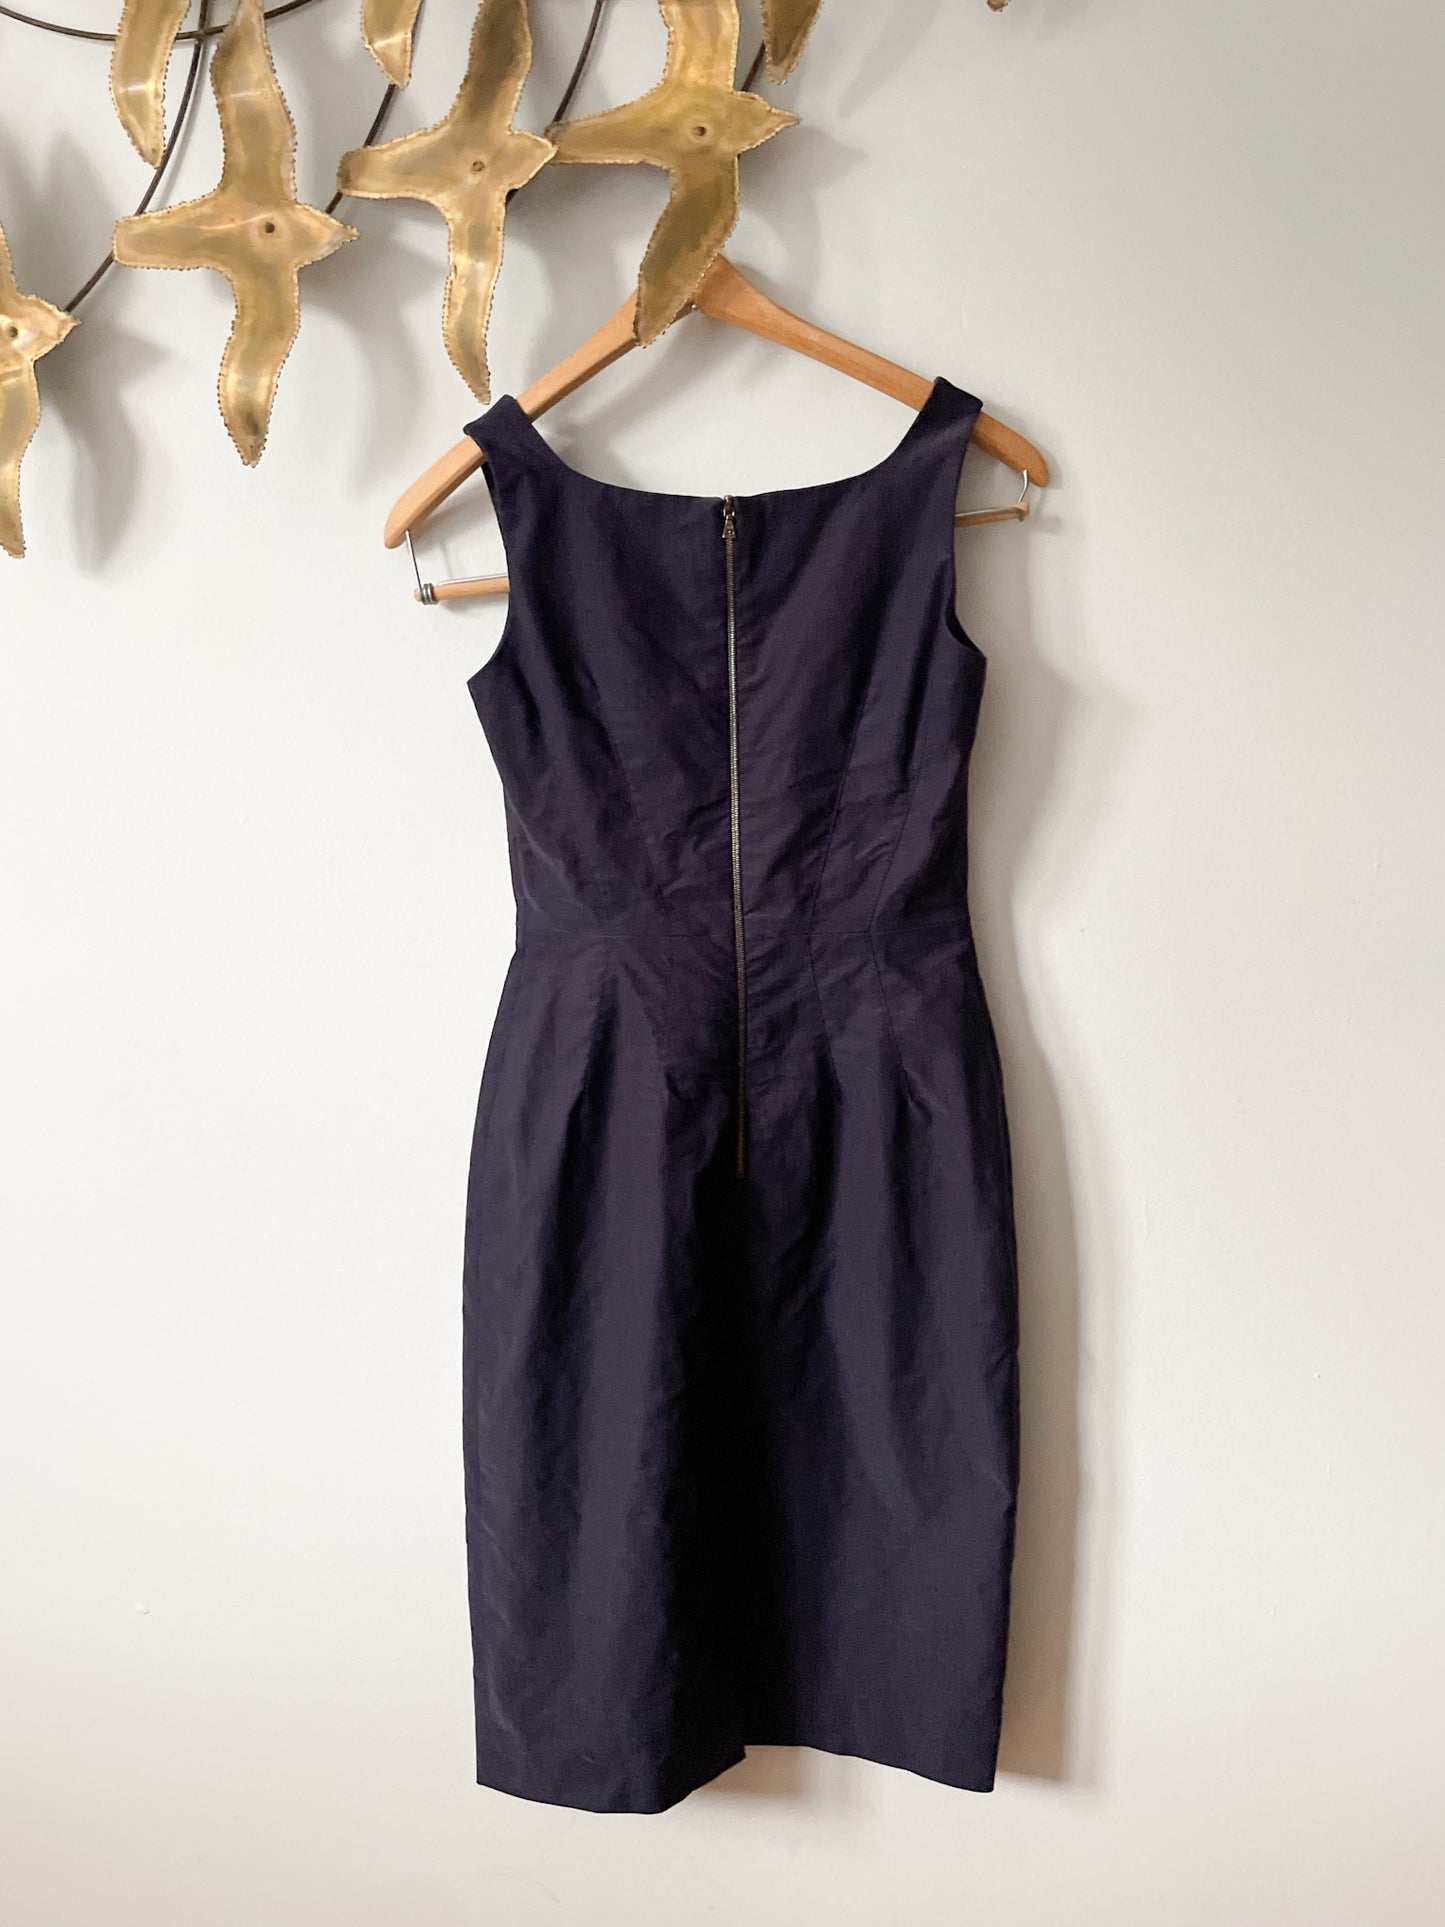 Judith & Charles Deep Purple Linen Sheath Dress - Size 2